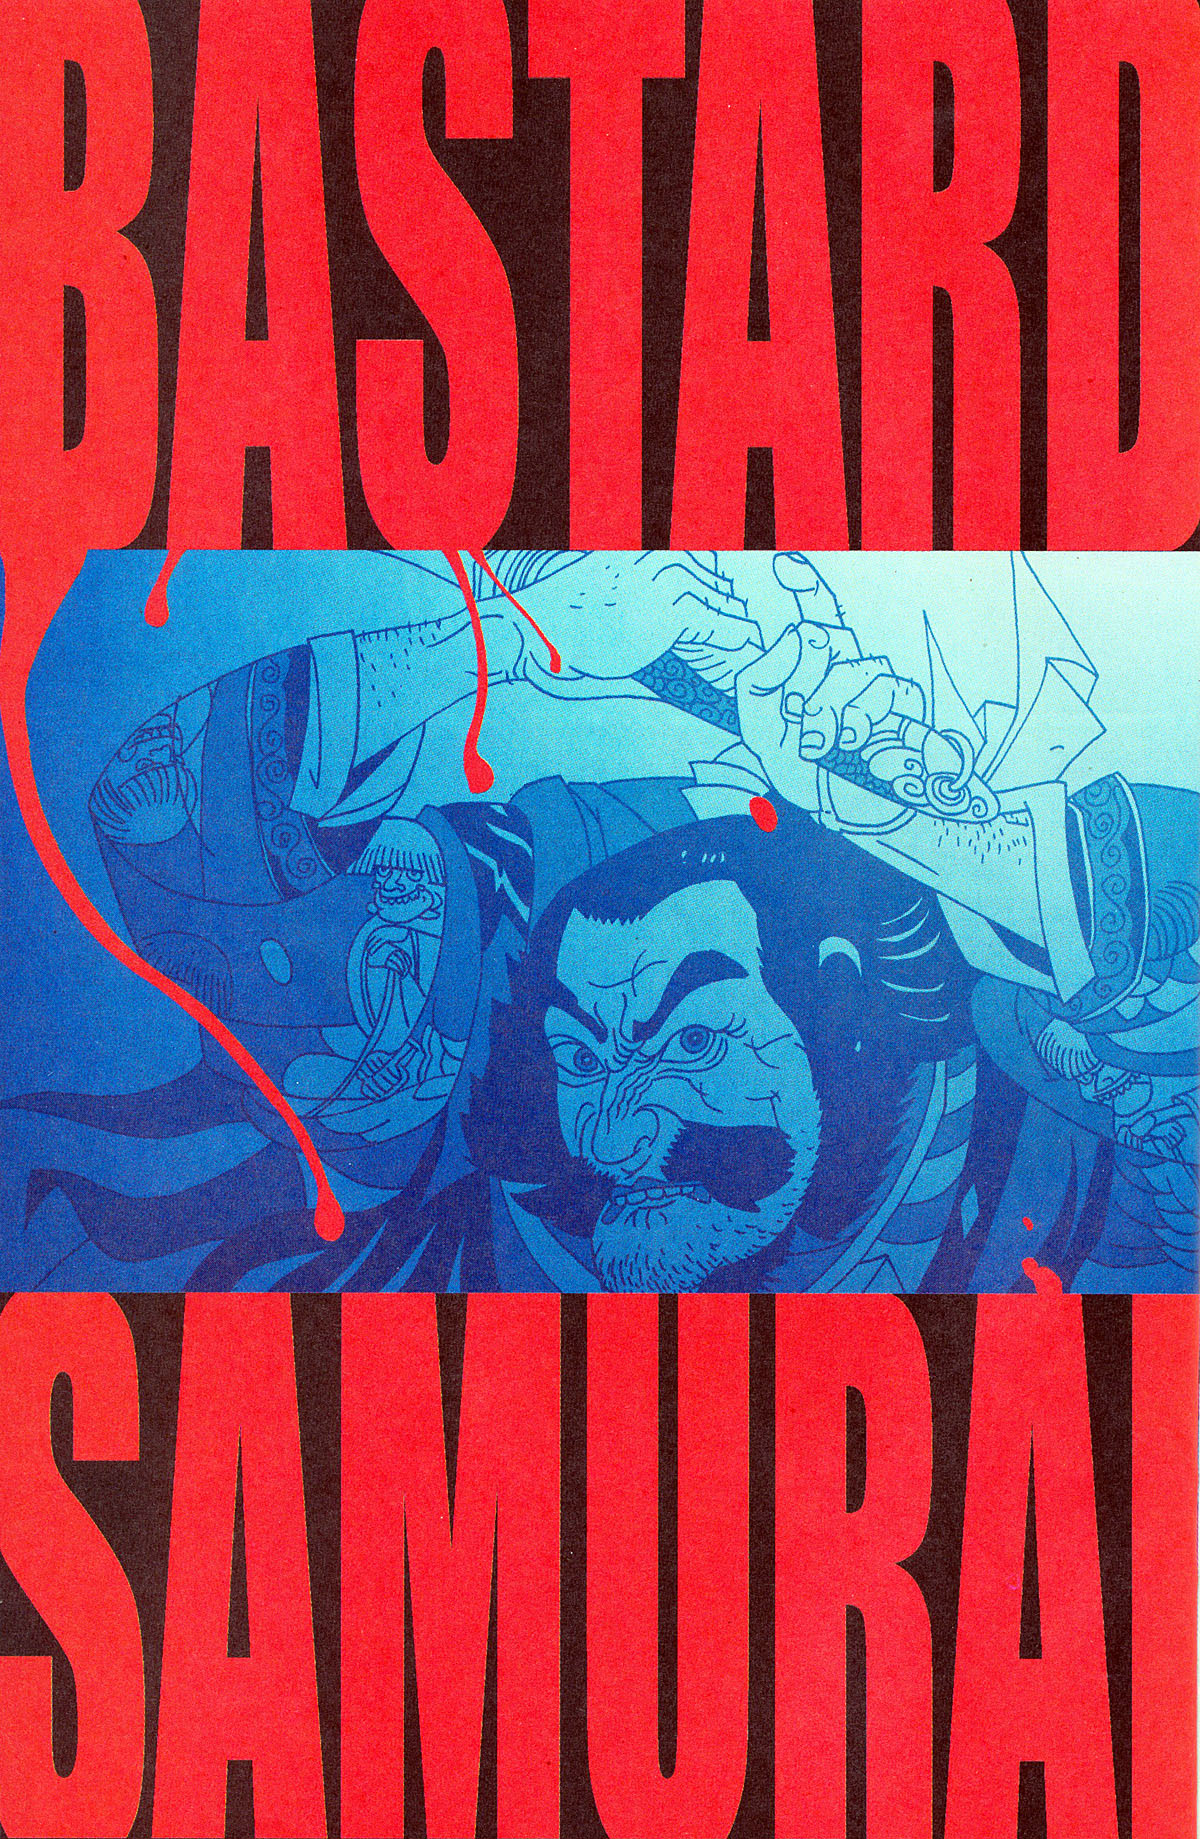 Bastard Samurai #3 (of 3) - Conclusion 